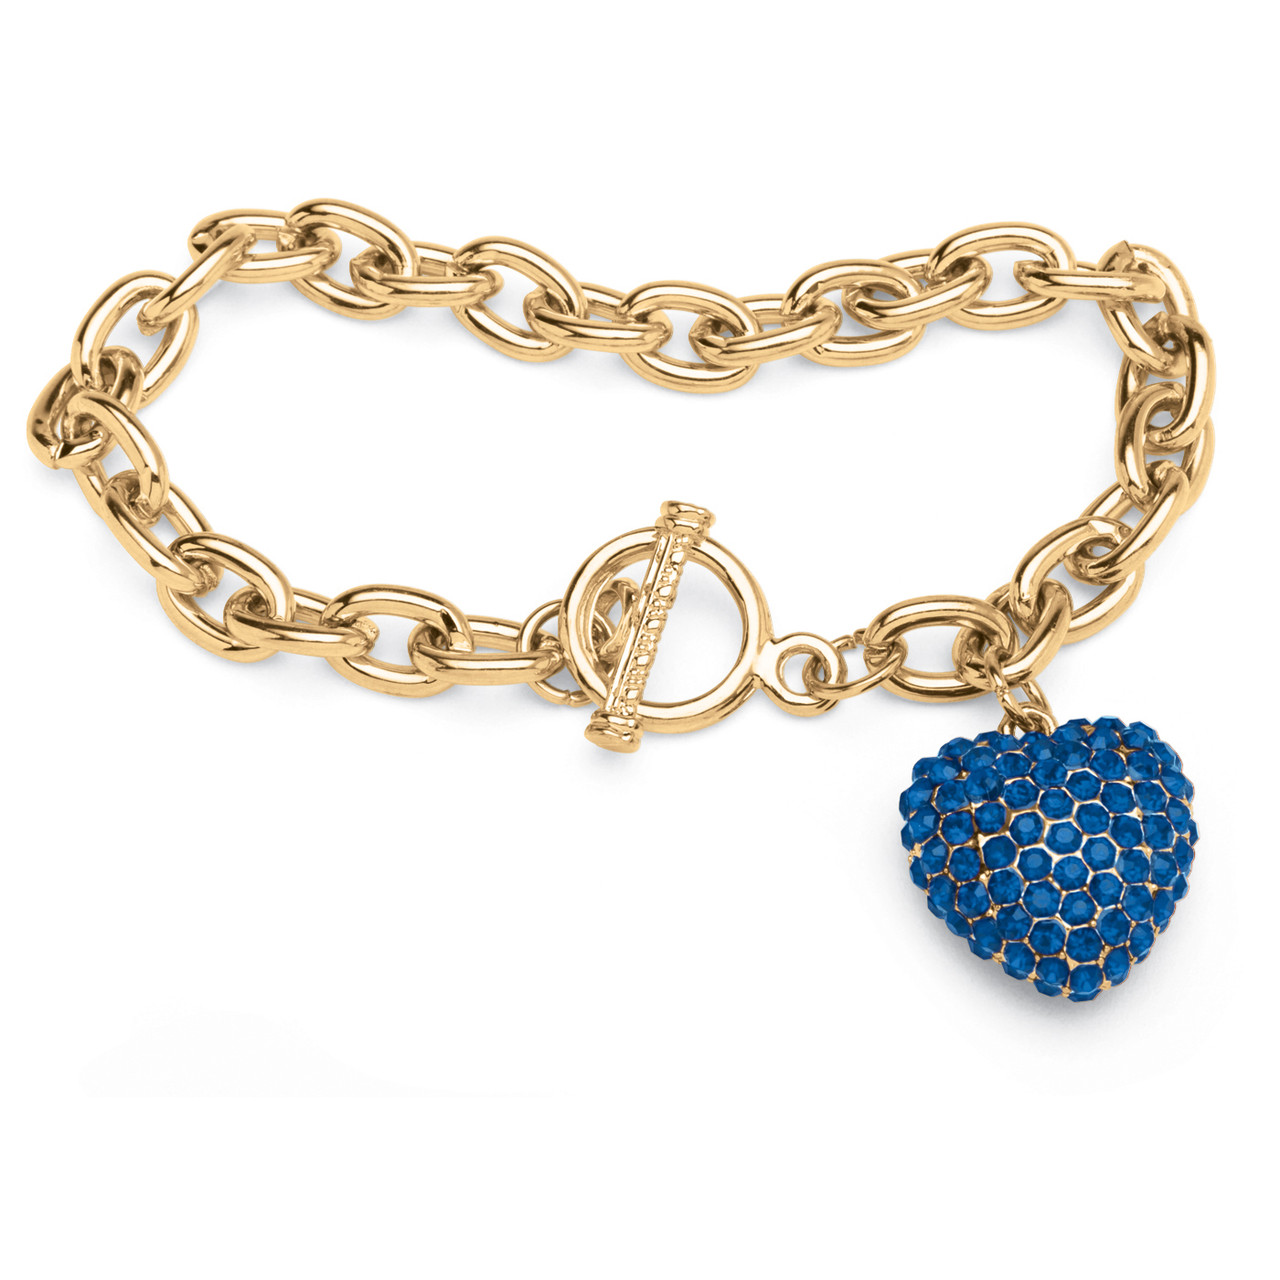 Crystal Heart And Crown Beads Charm Bracelets – Kate McEnroe New York